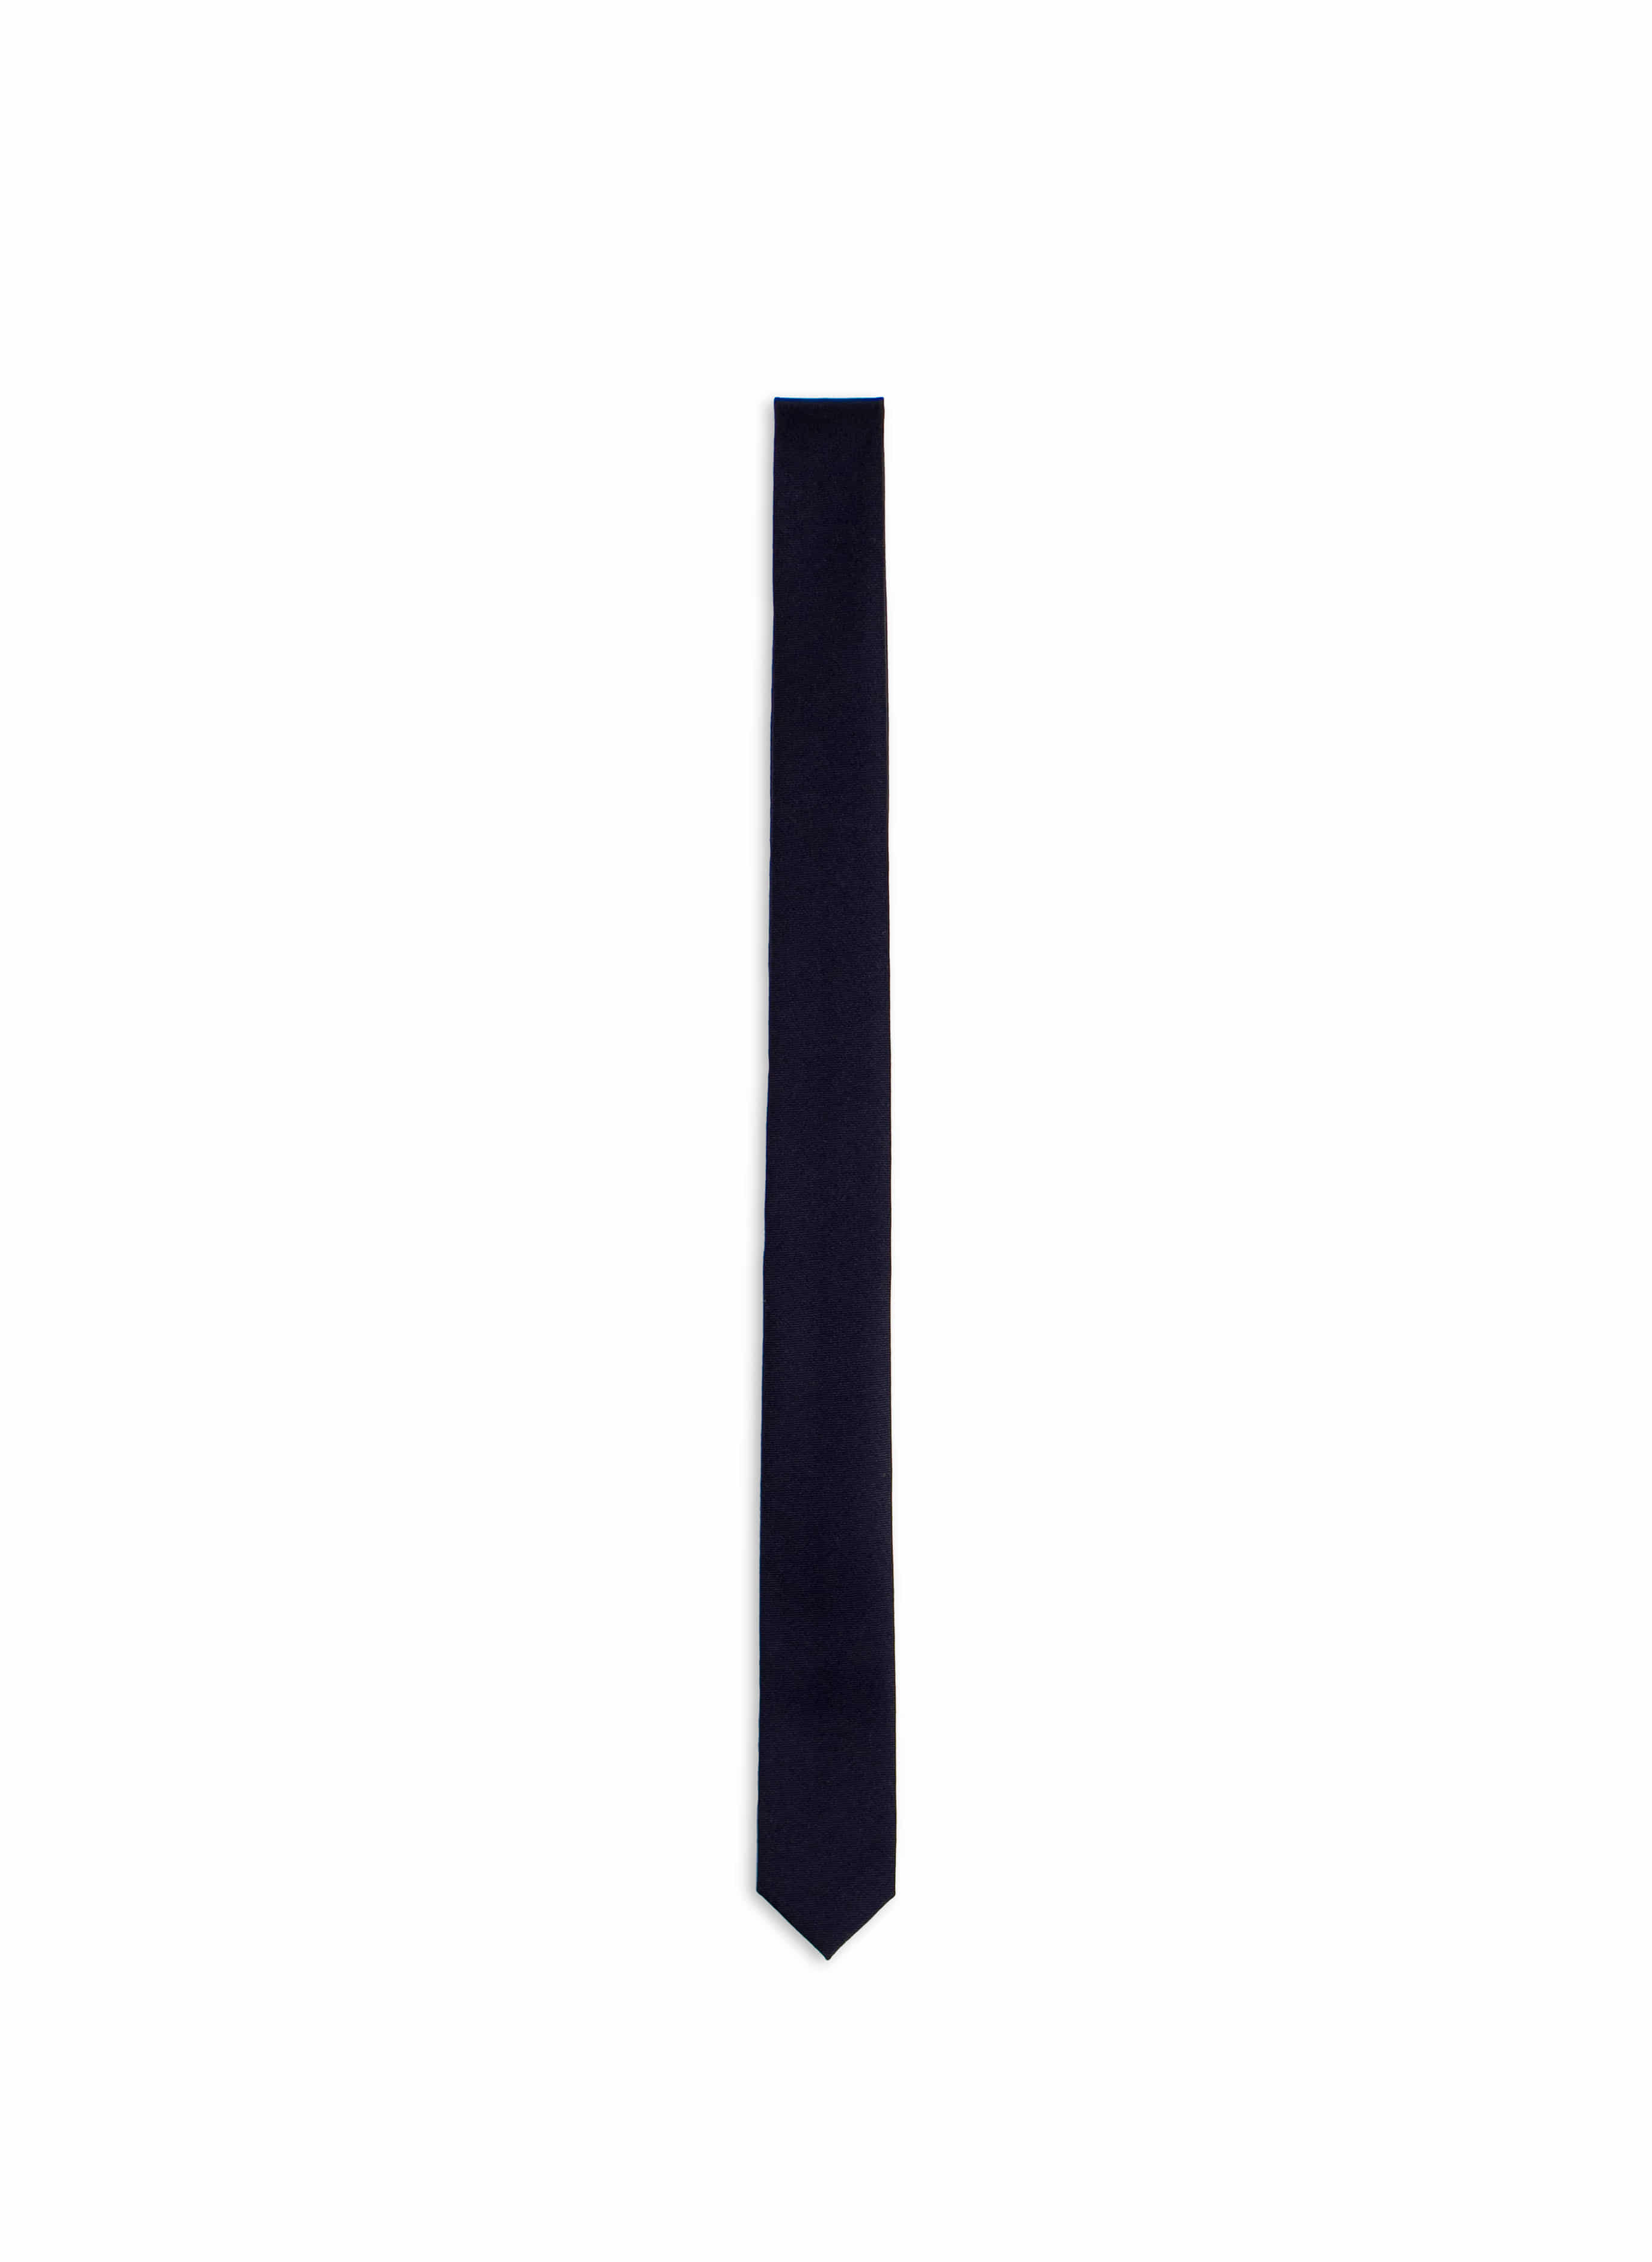 Architect Slim Tie (Ver.2), 와기